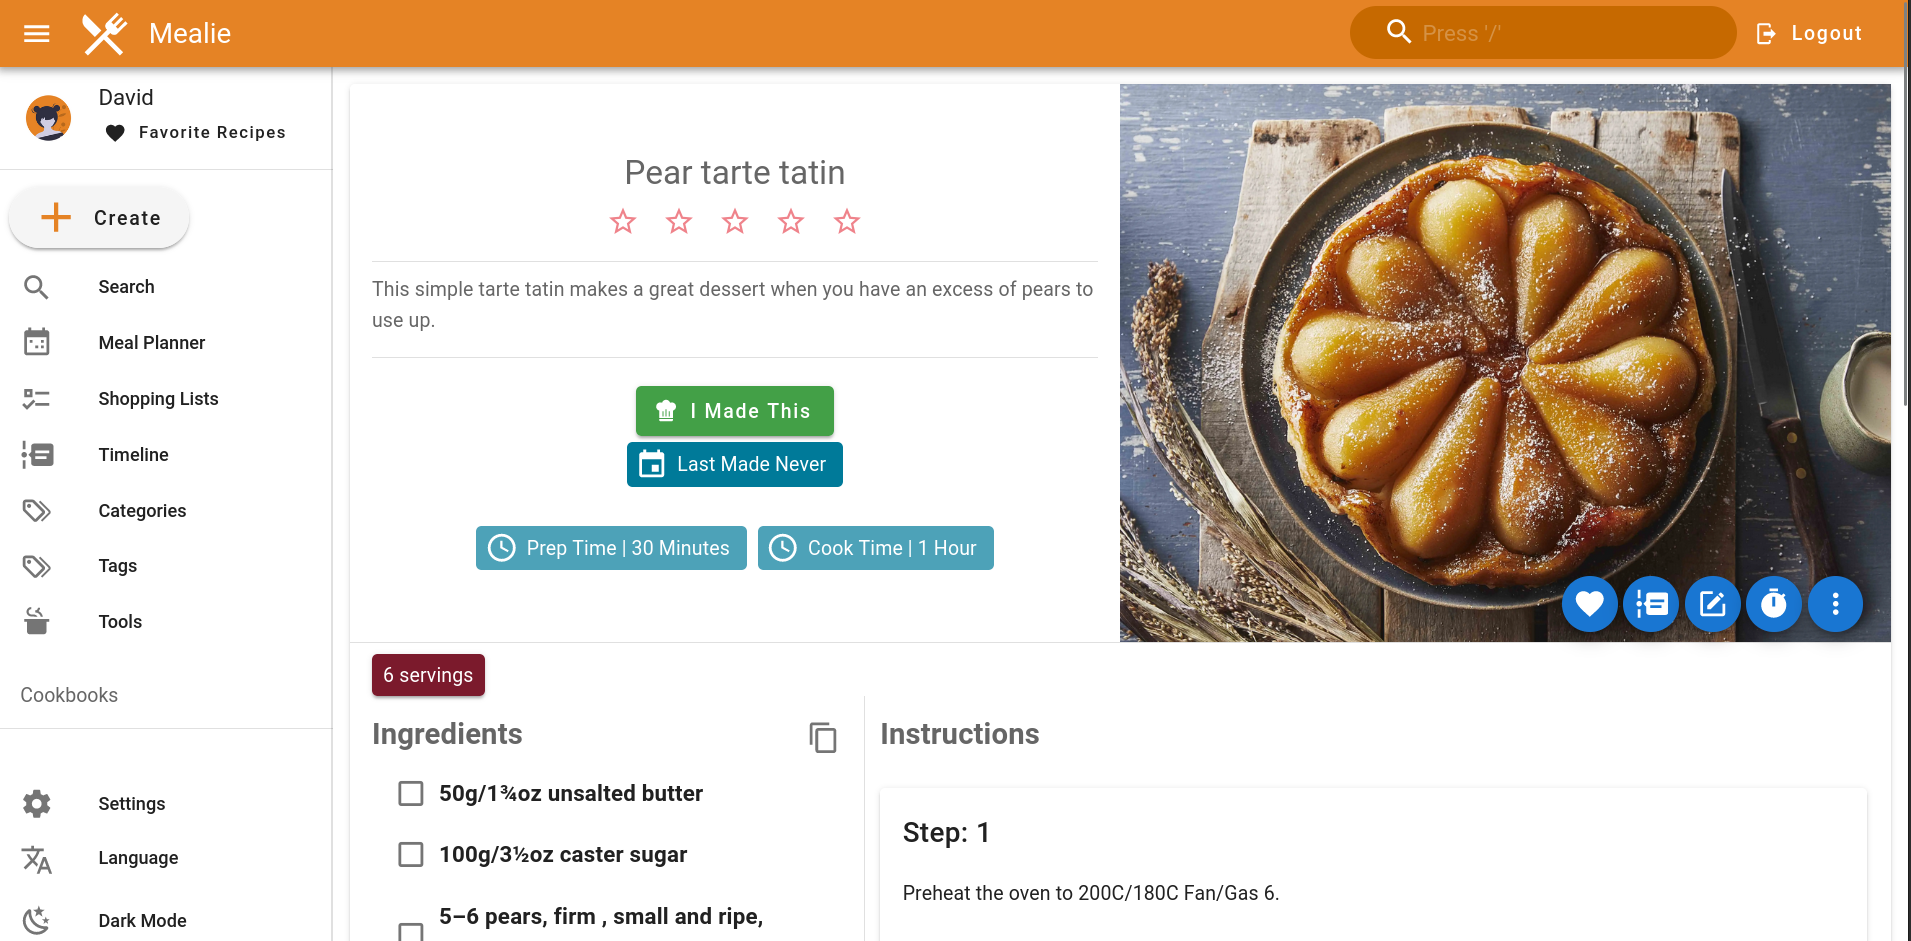 Mealie web interface showing a recipe for tarte tatin